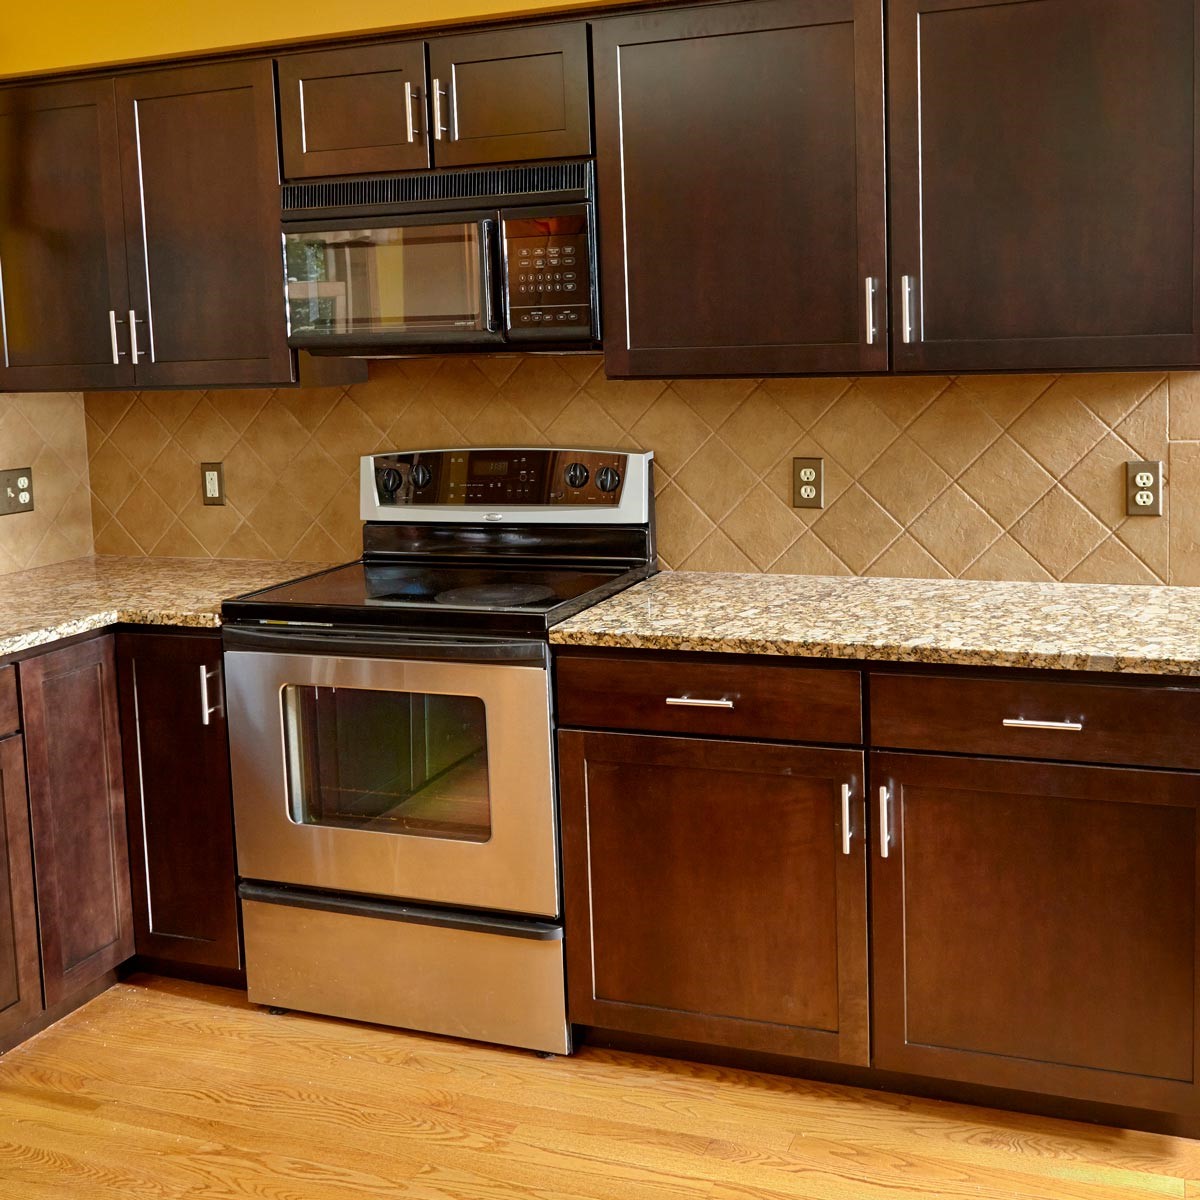 3. Refacing Kitchen Cabinets with Wood Veneer via Simphome.com